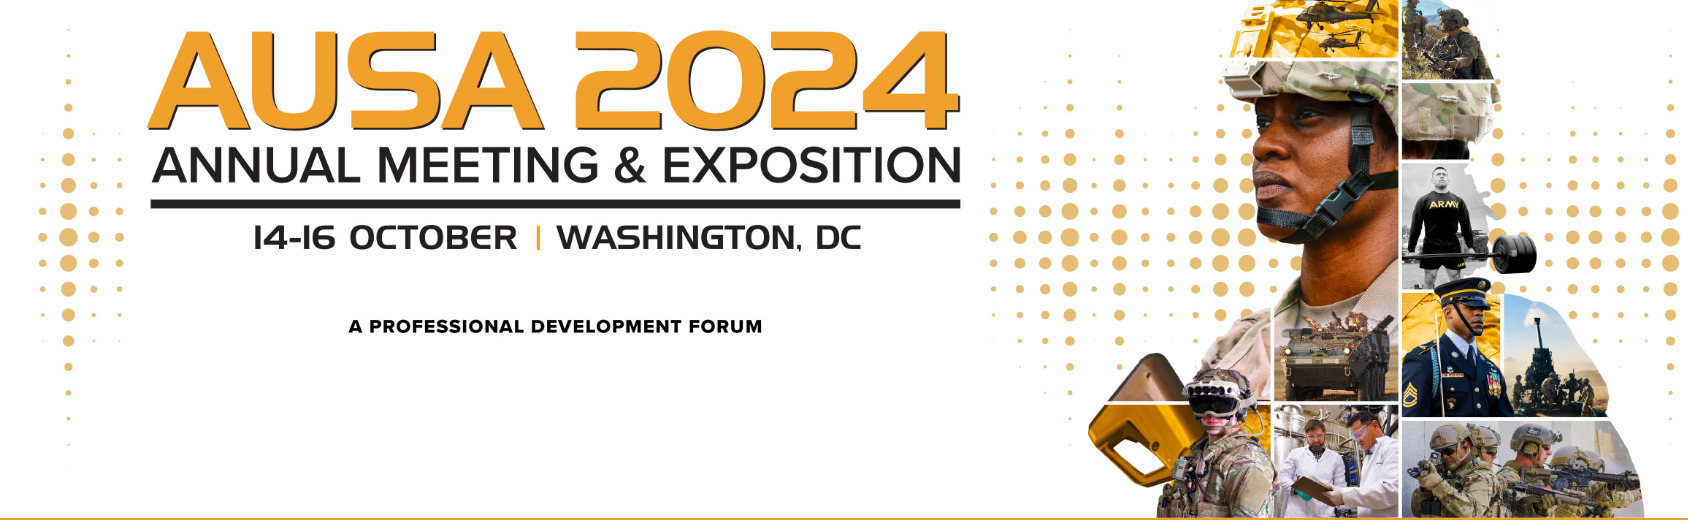 AUSA 2024 Event Graphic, 14-16 October, Washington DC